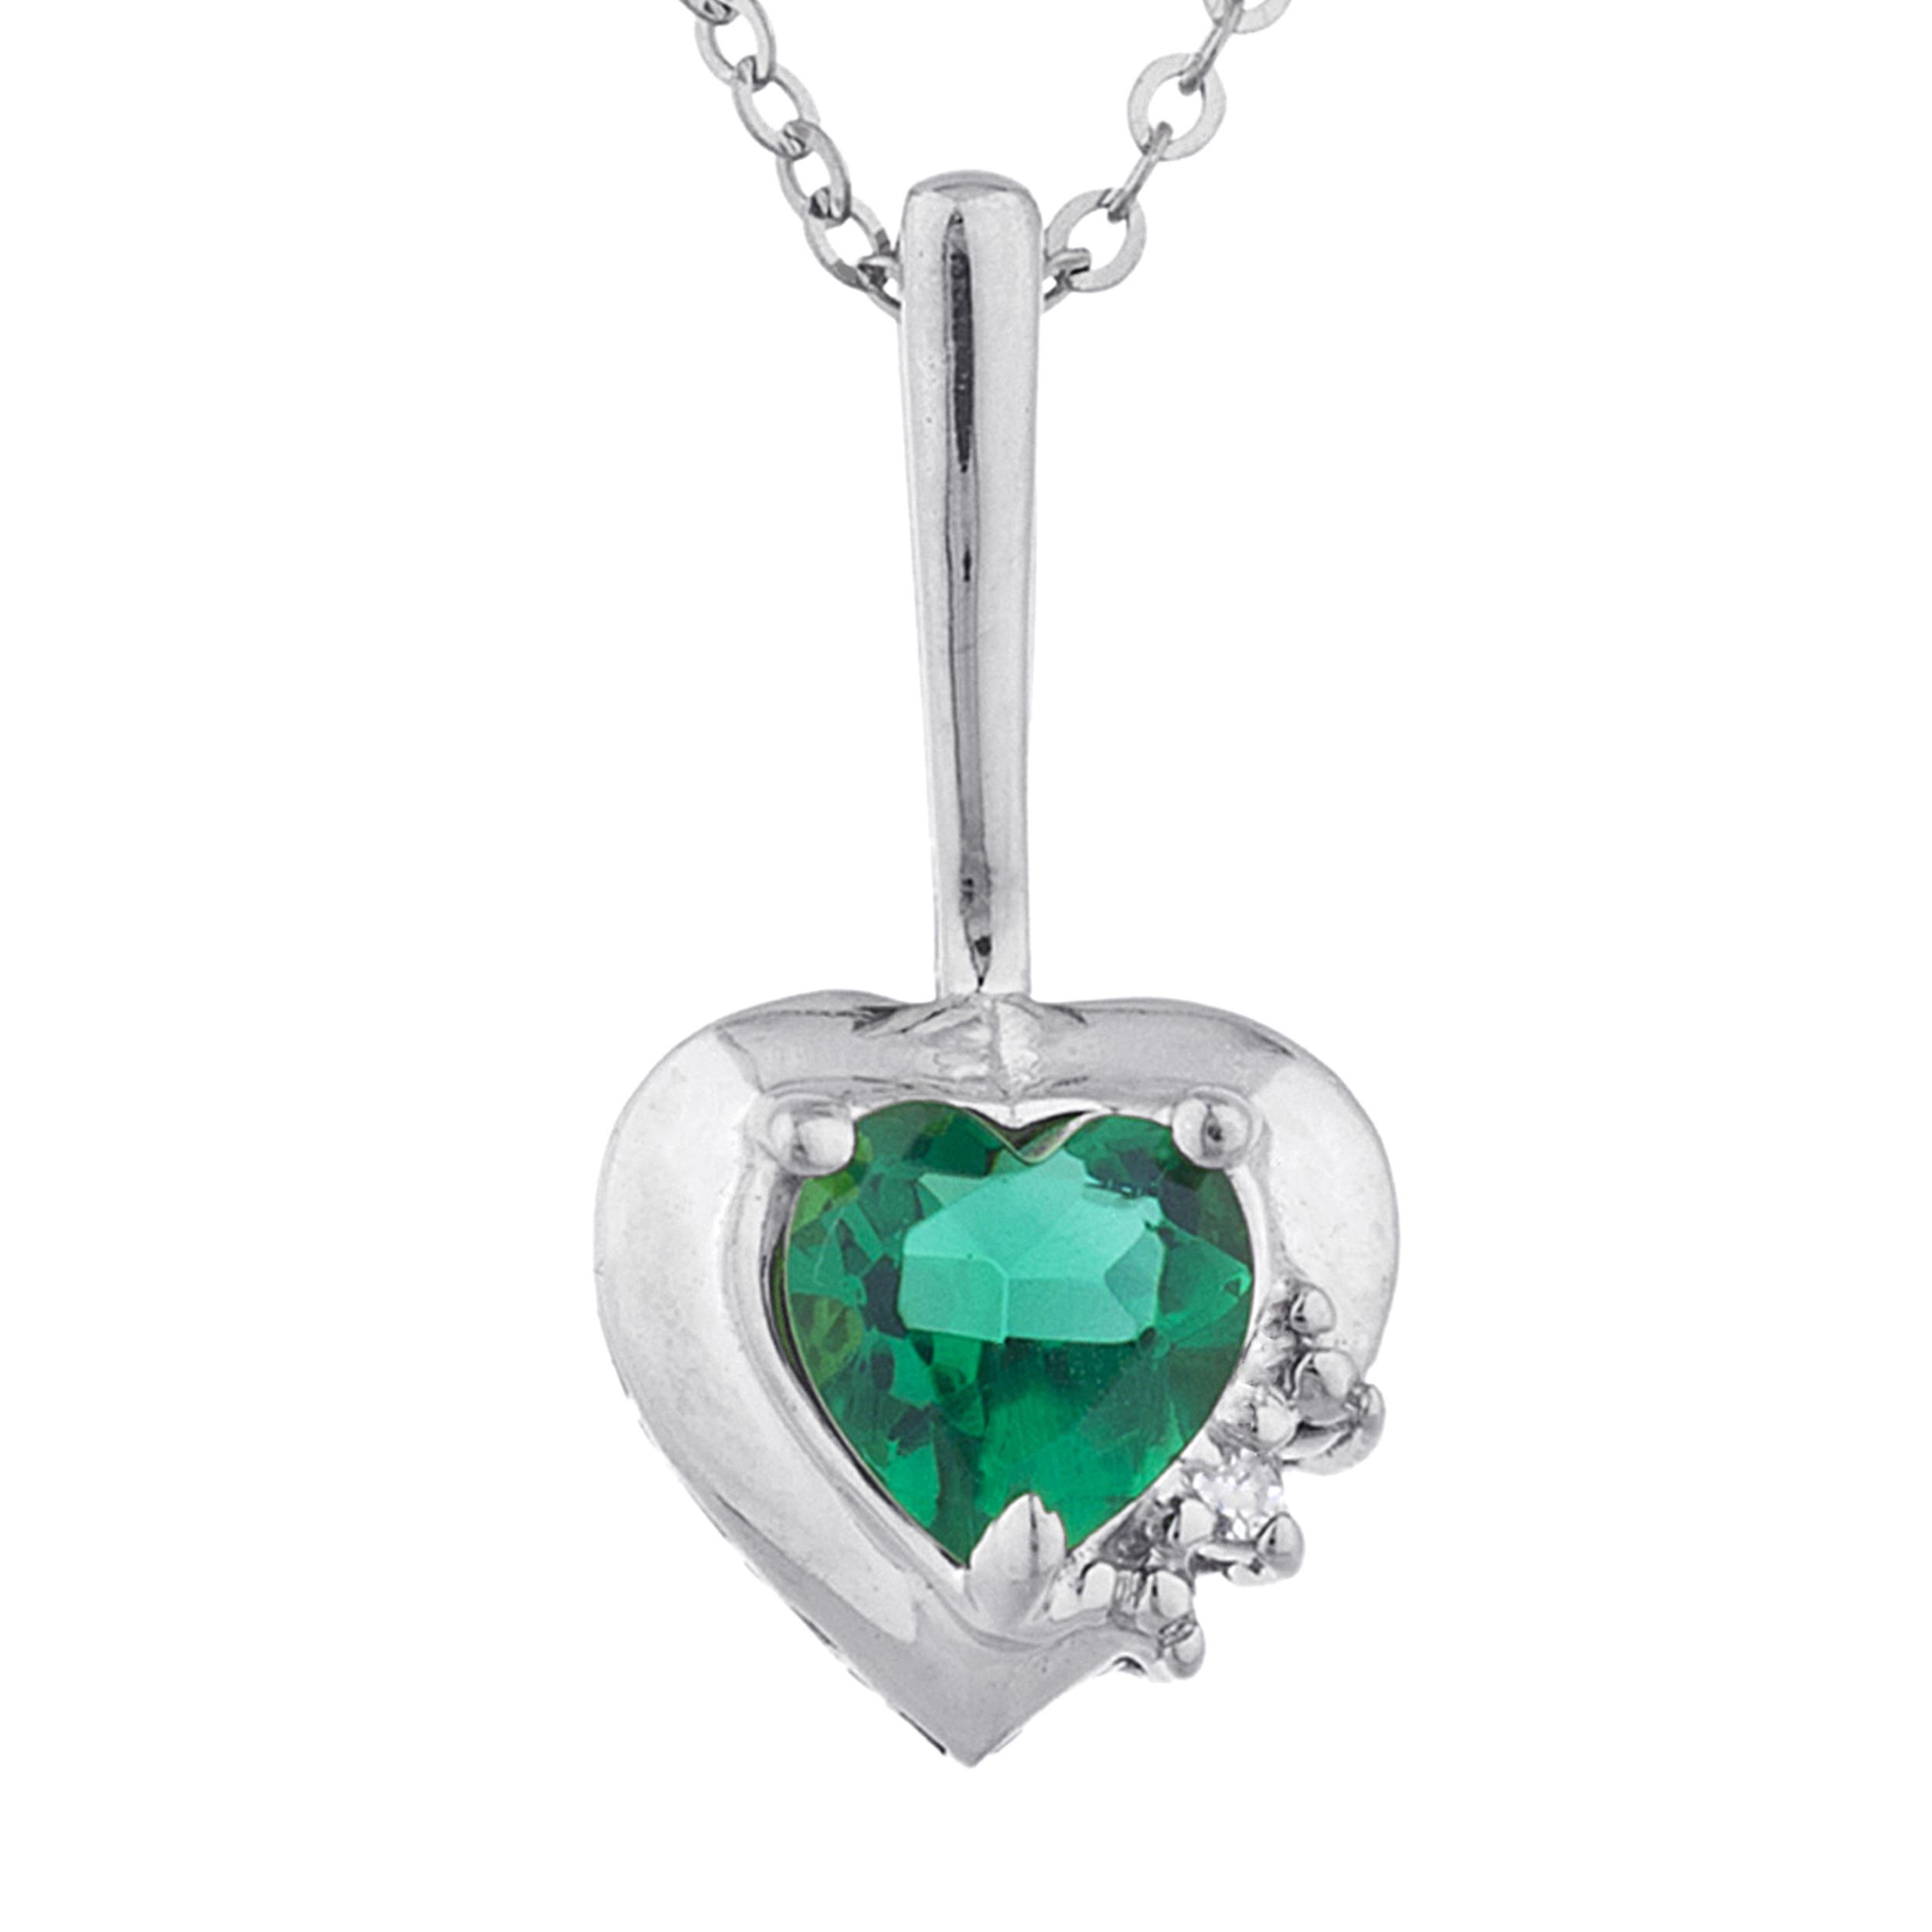 Emerald & Diamond Heart Pendant .925 Sterling Silver | eBay